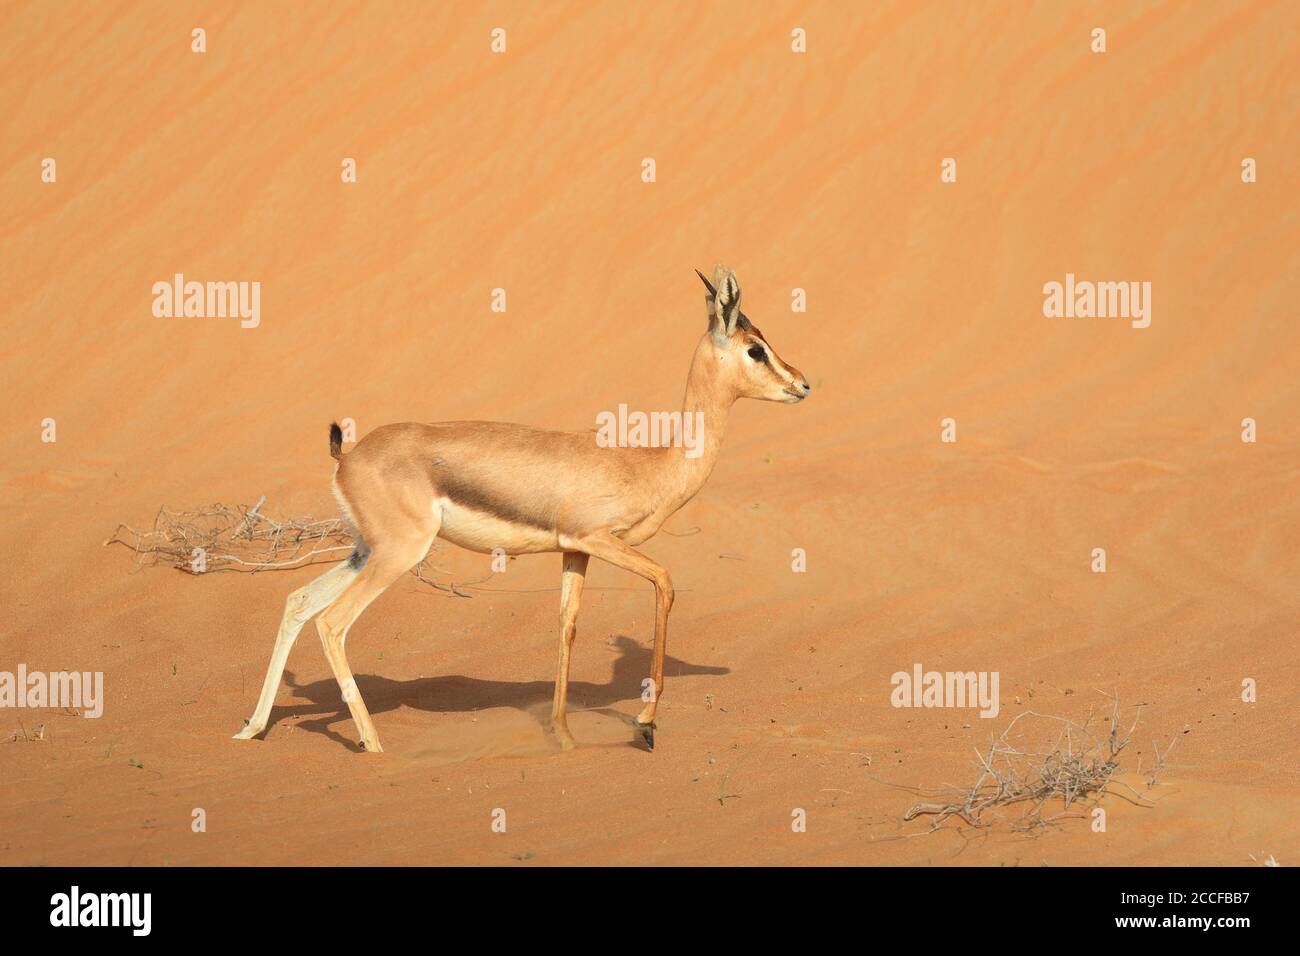 Arabian gazelle Stock Photo